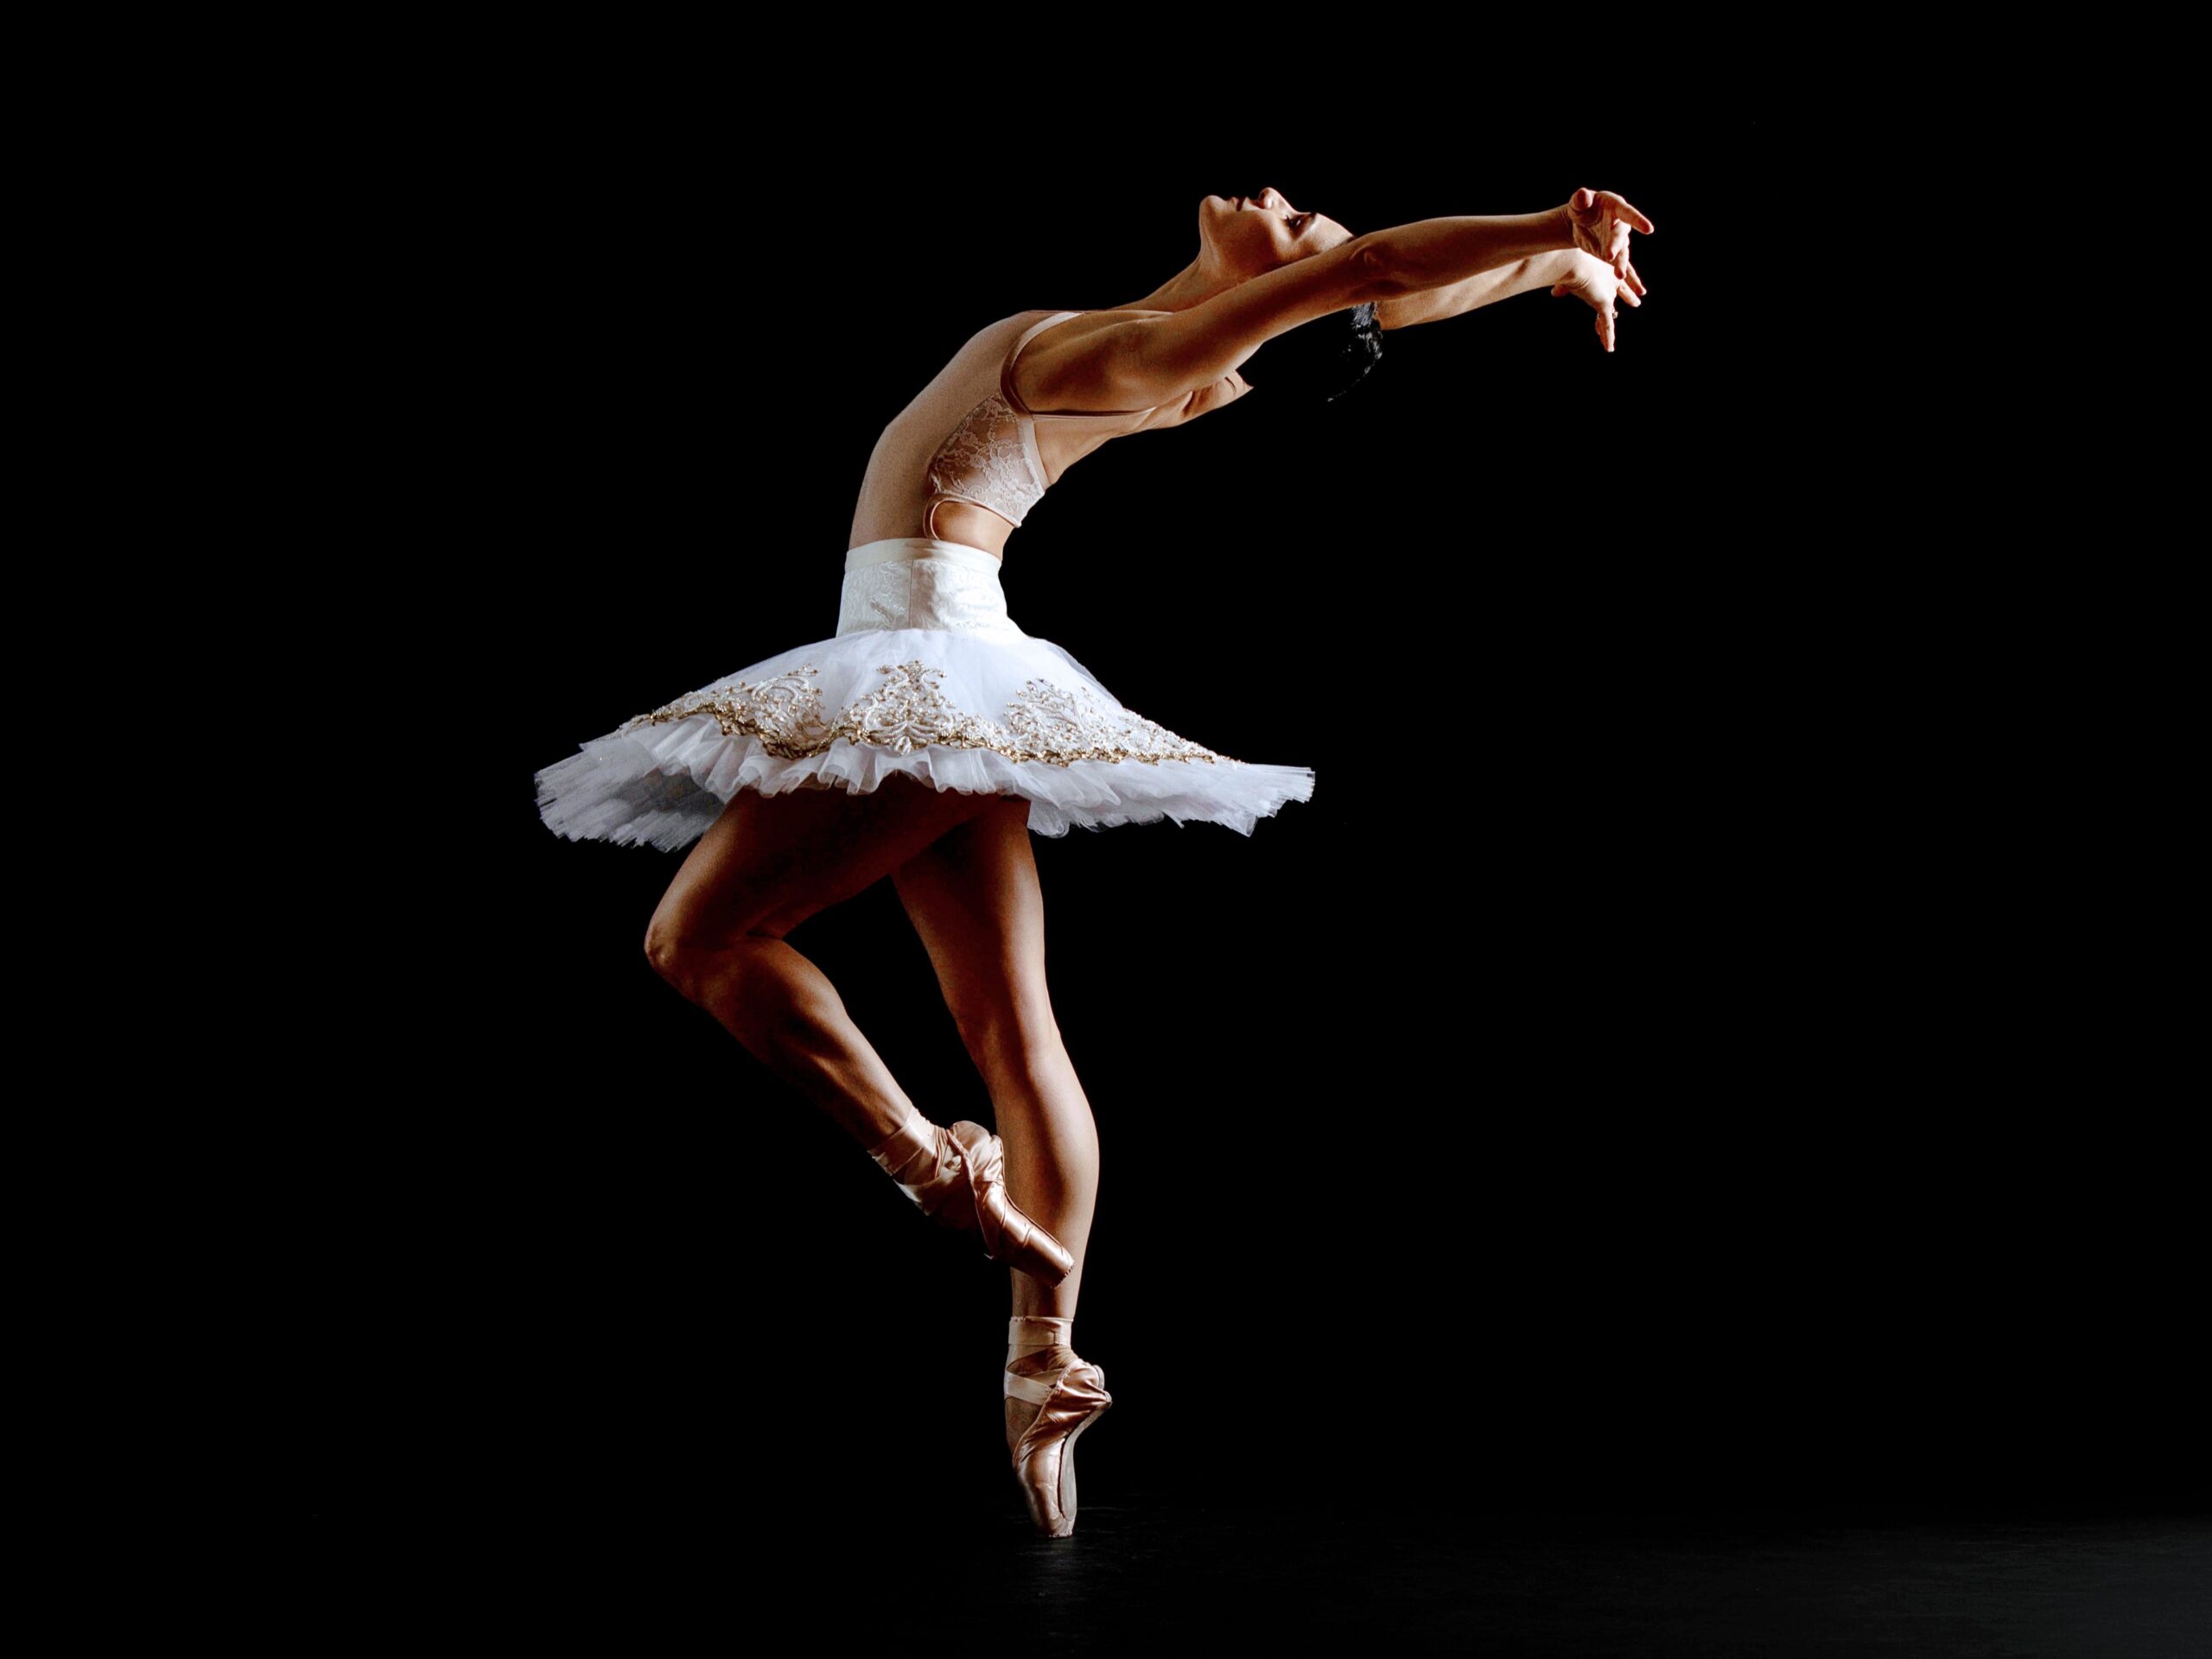 Female dancer wearing a white tutu dancing in front of black backdrop